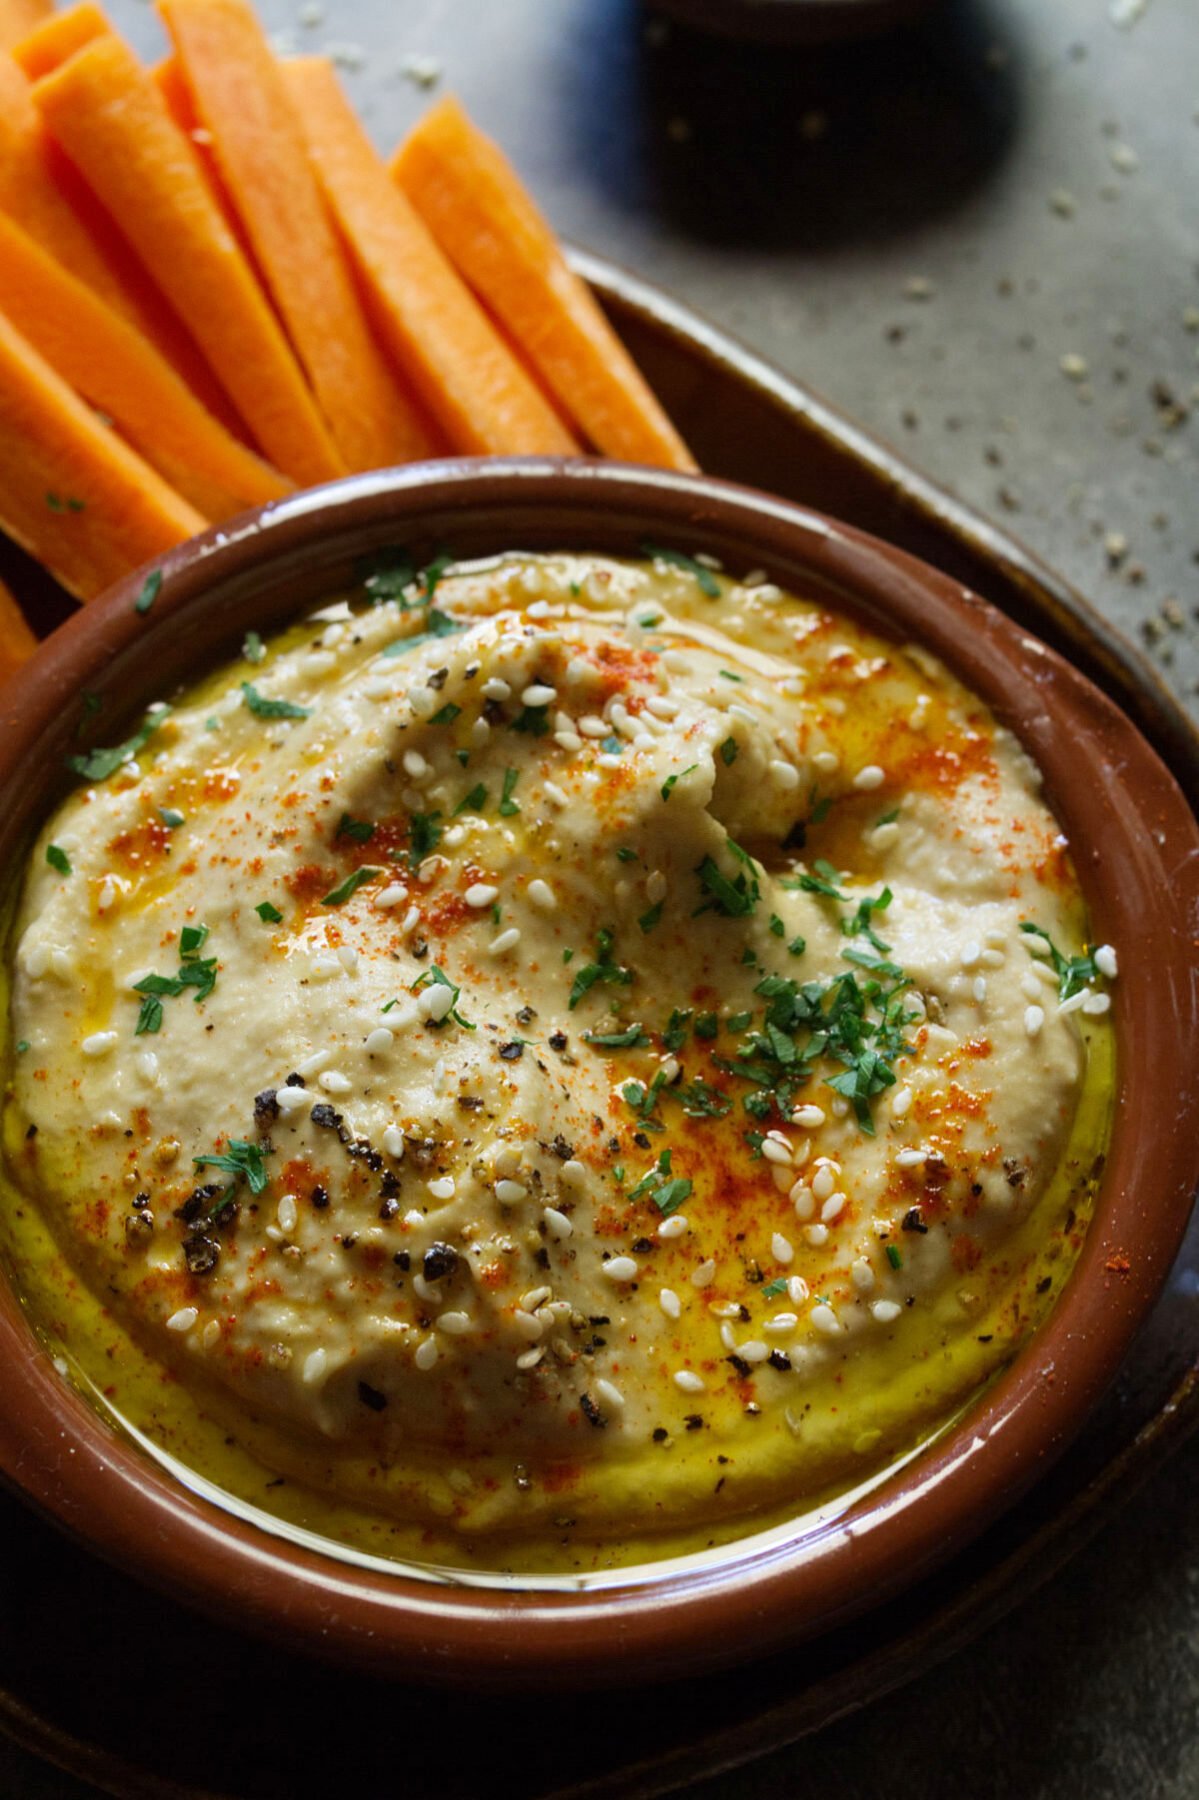 A bowl of Mediterranean hummus beside some carrot sticks